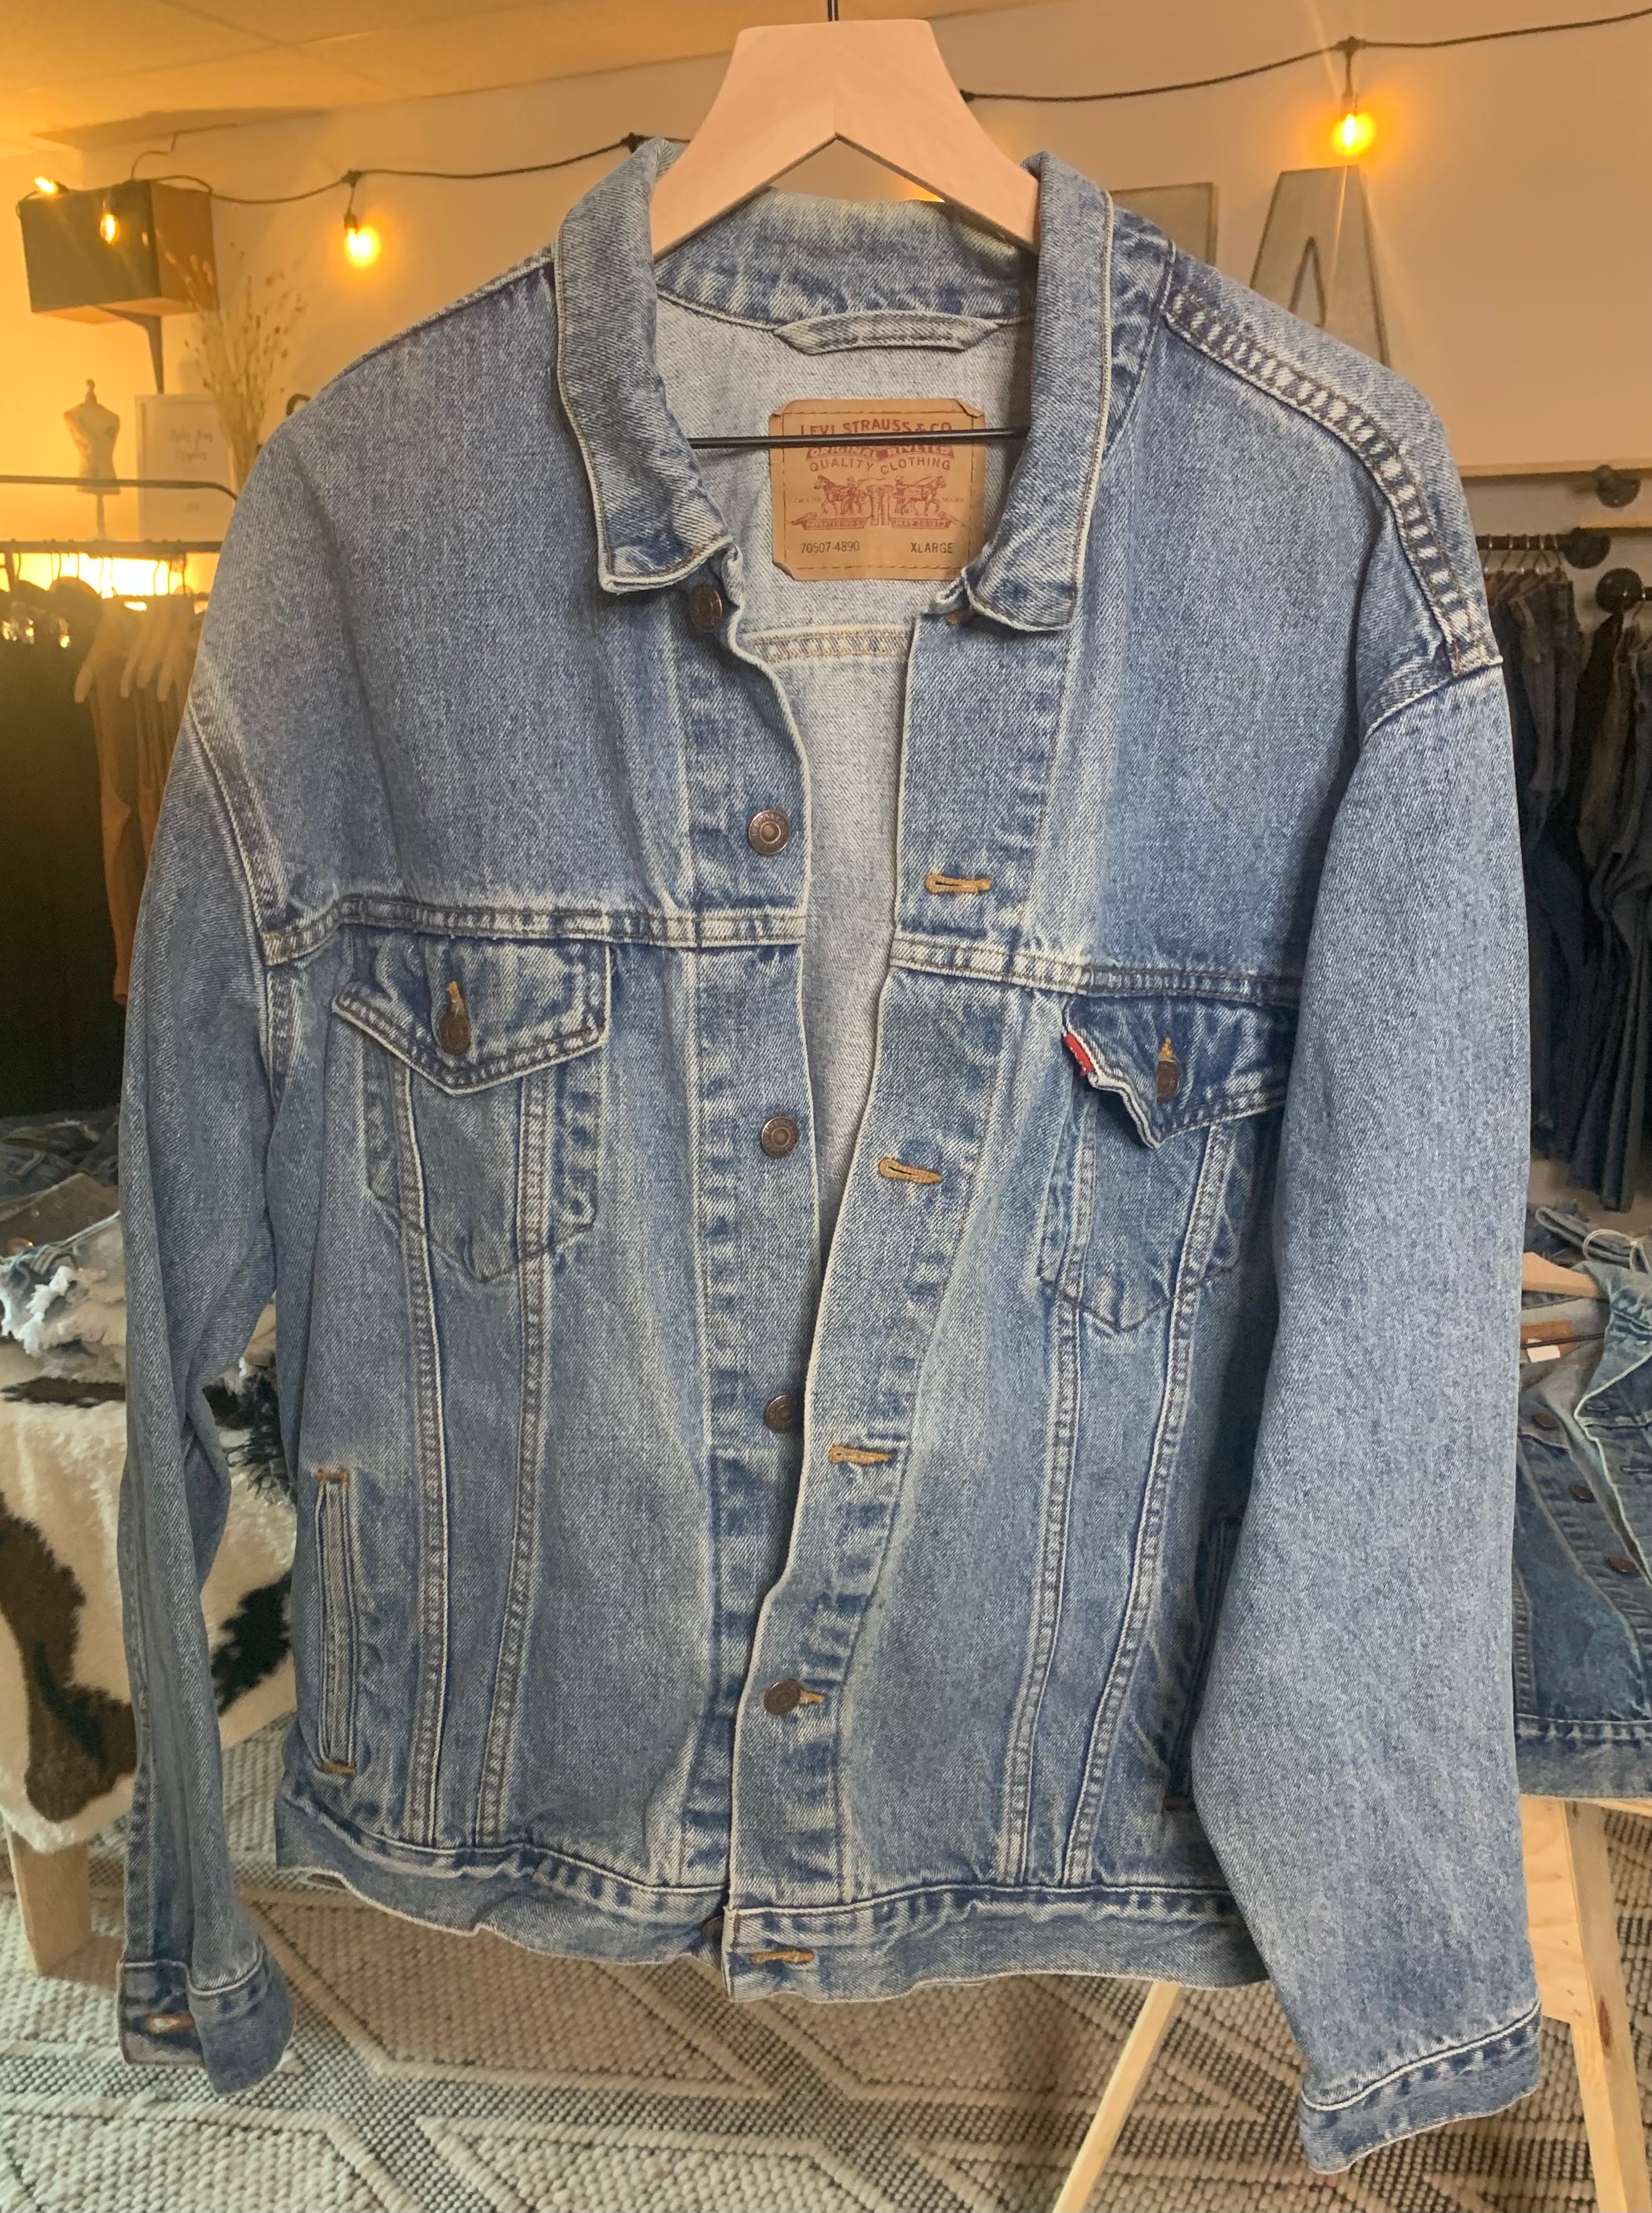 4. Levi’s Vintage Denim Jacket